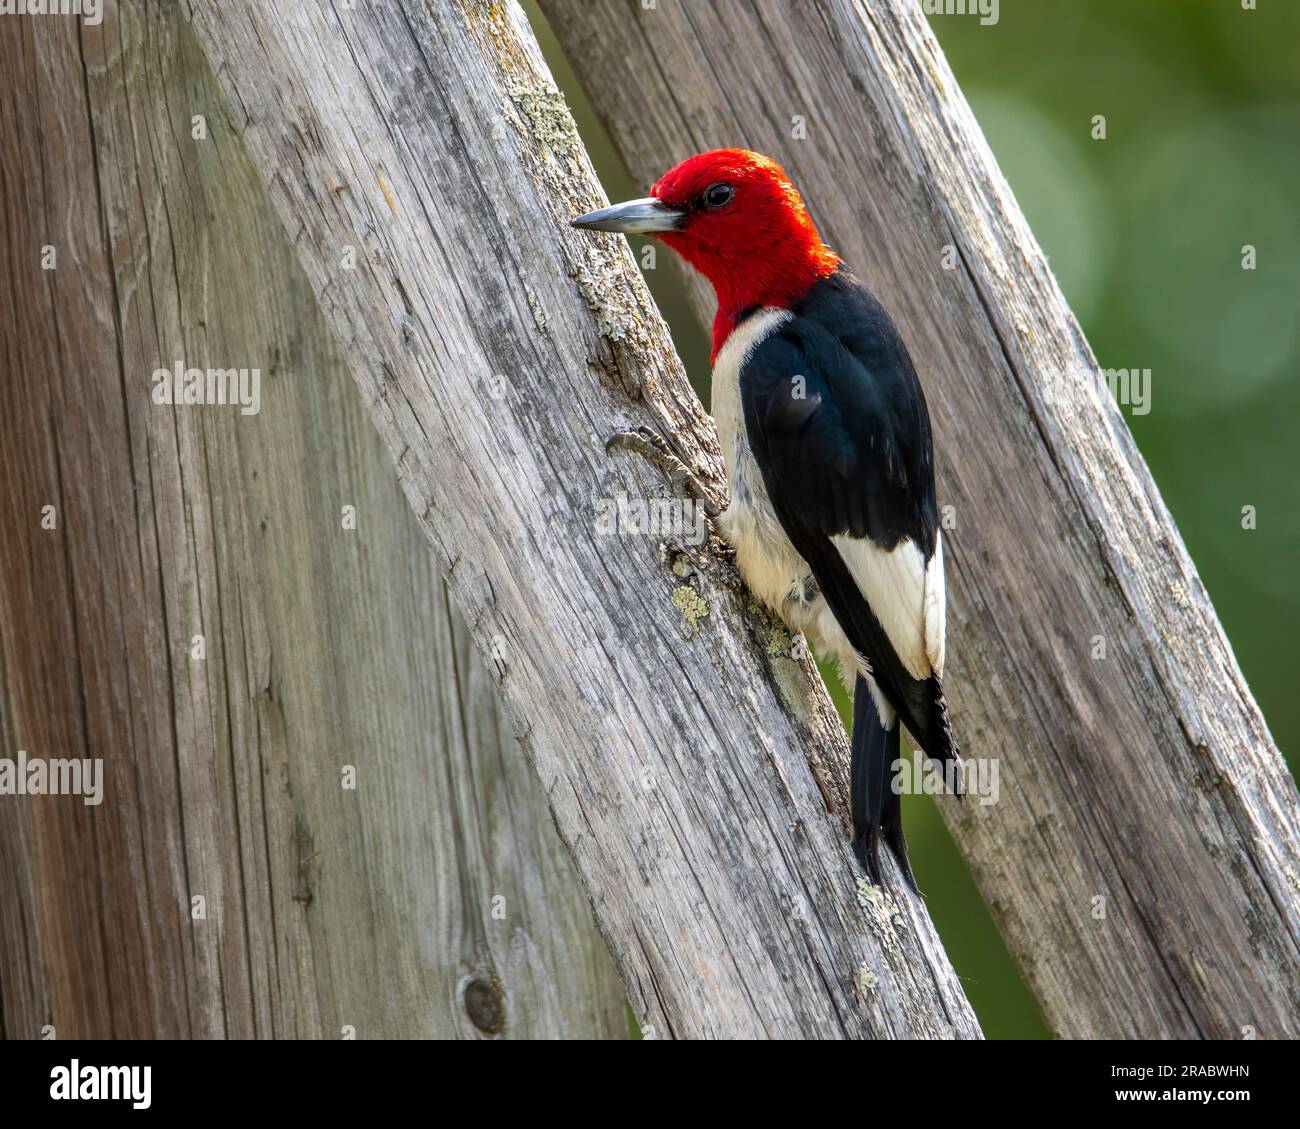 Pájaro carpintero de cabeza roja posado en un tronco de árbol. Foto de stock